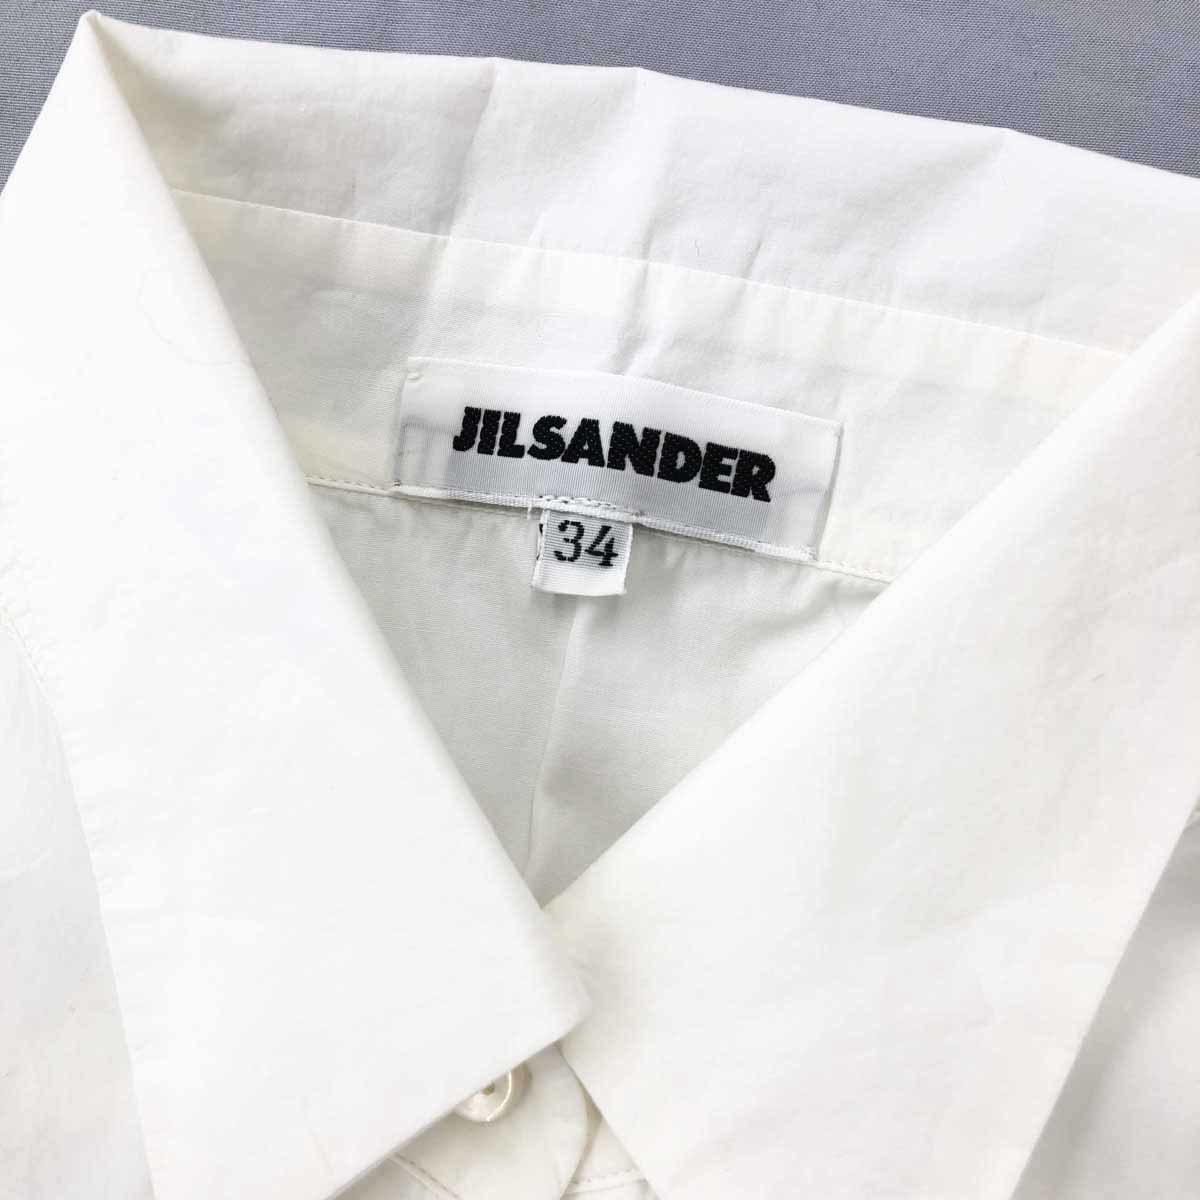 JIL SANDER ジルサンダー 半袖シャツ サイズ34 ホワイト レディース 